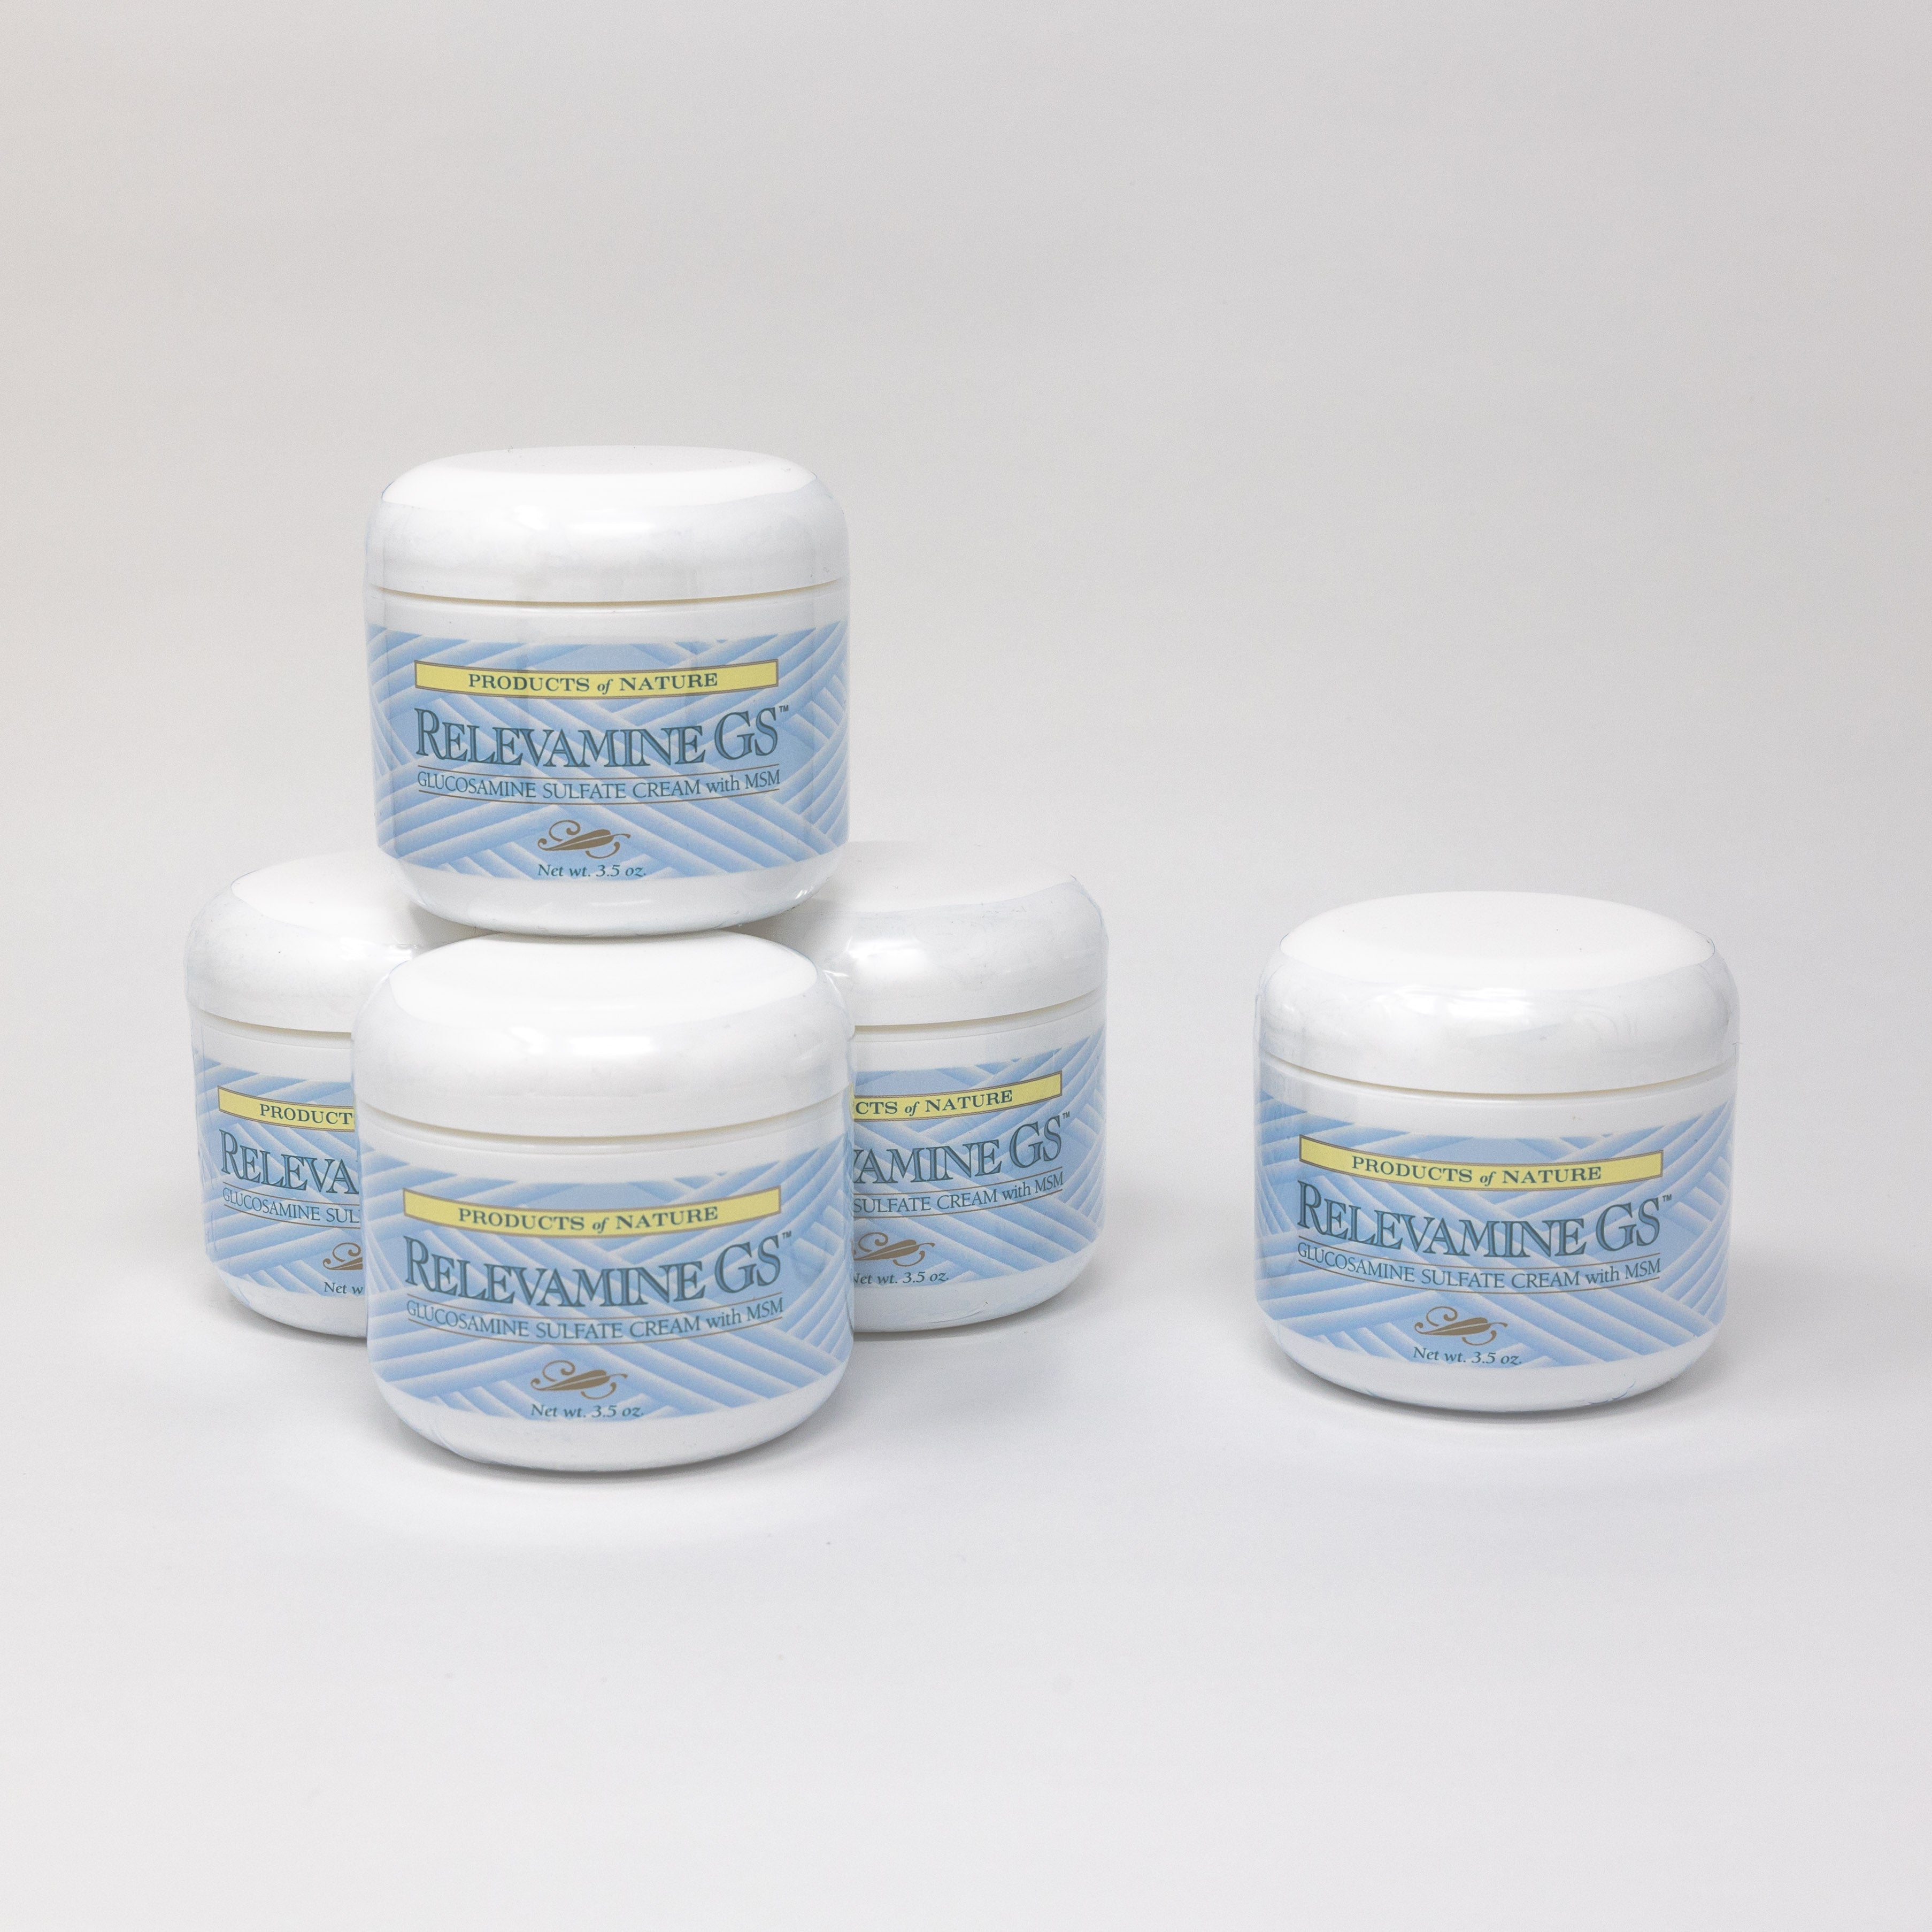 Relevamine GS Glucosamine Sulfate Cream with MSM - Buy 4 get 1 free - 3.5 oz. jars